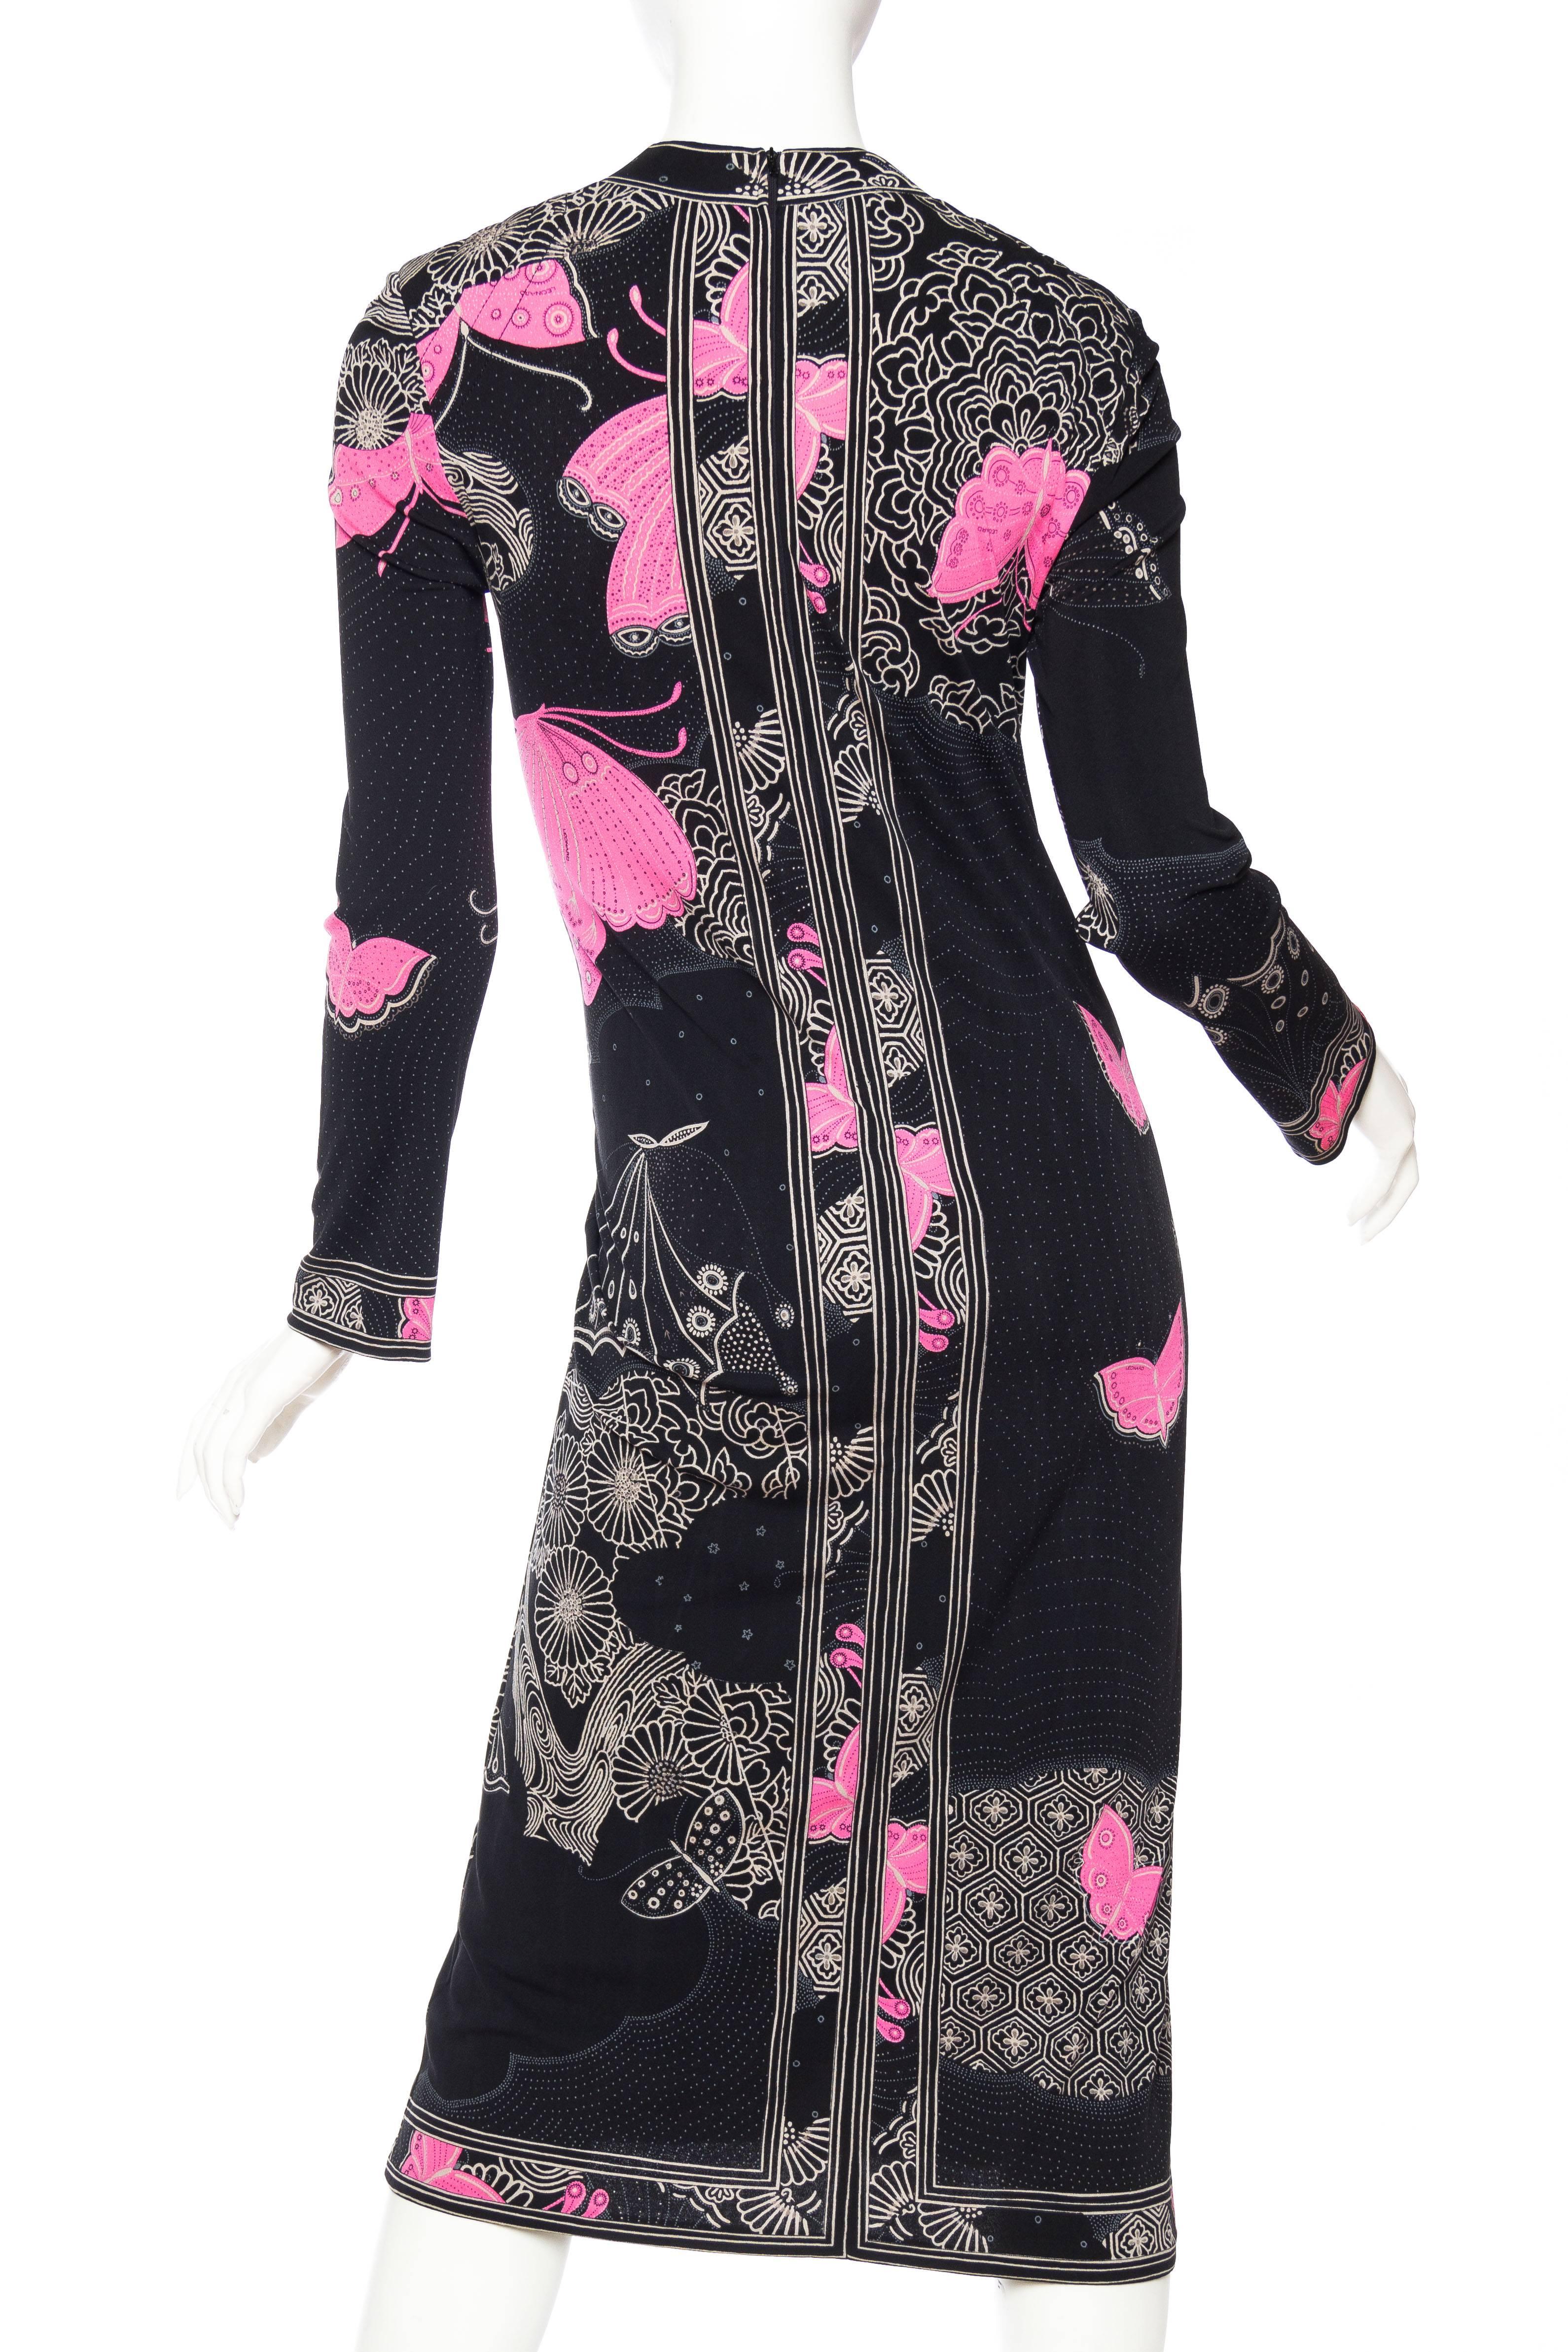 1970S LEONARD Black & Pink Silk Jersey Asian Inspired Butterfly Print Dress 3